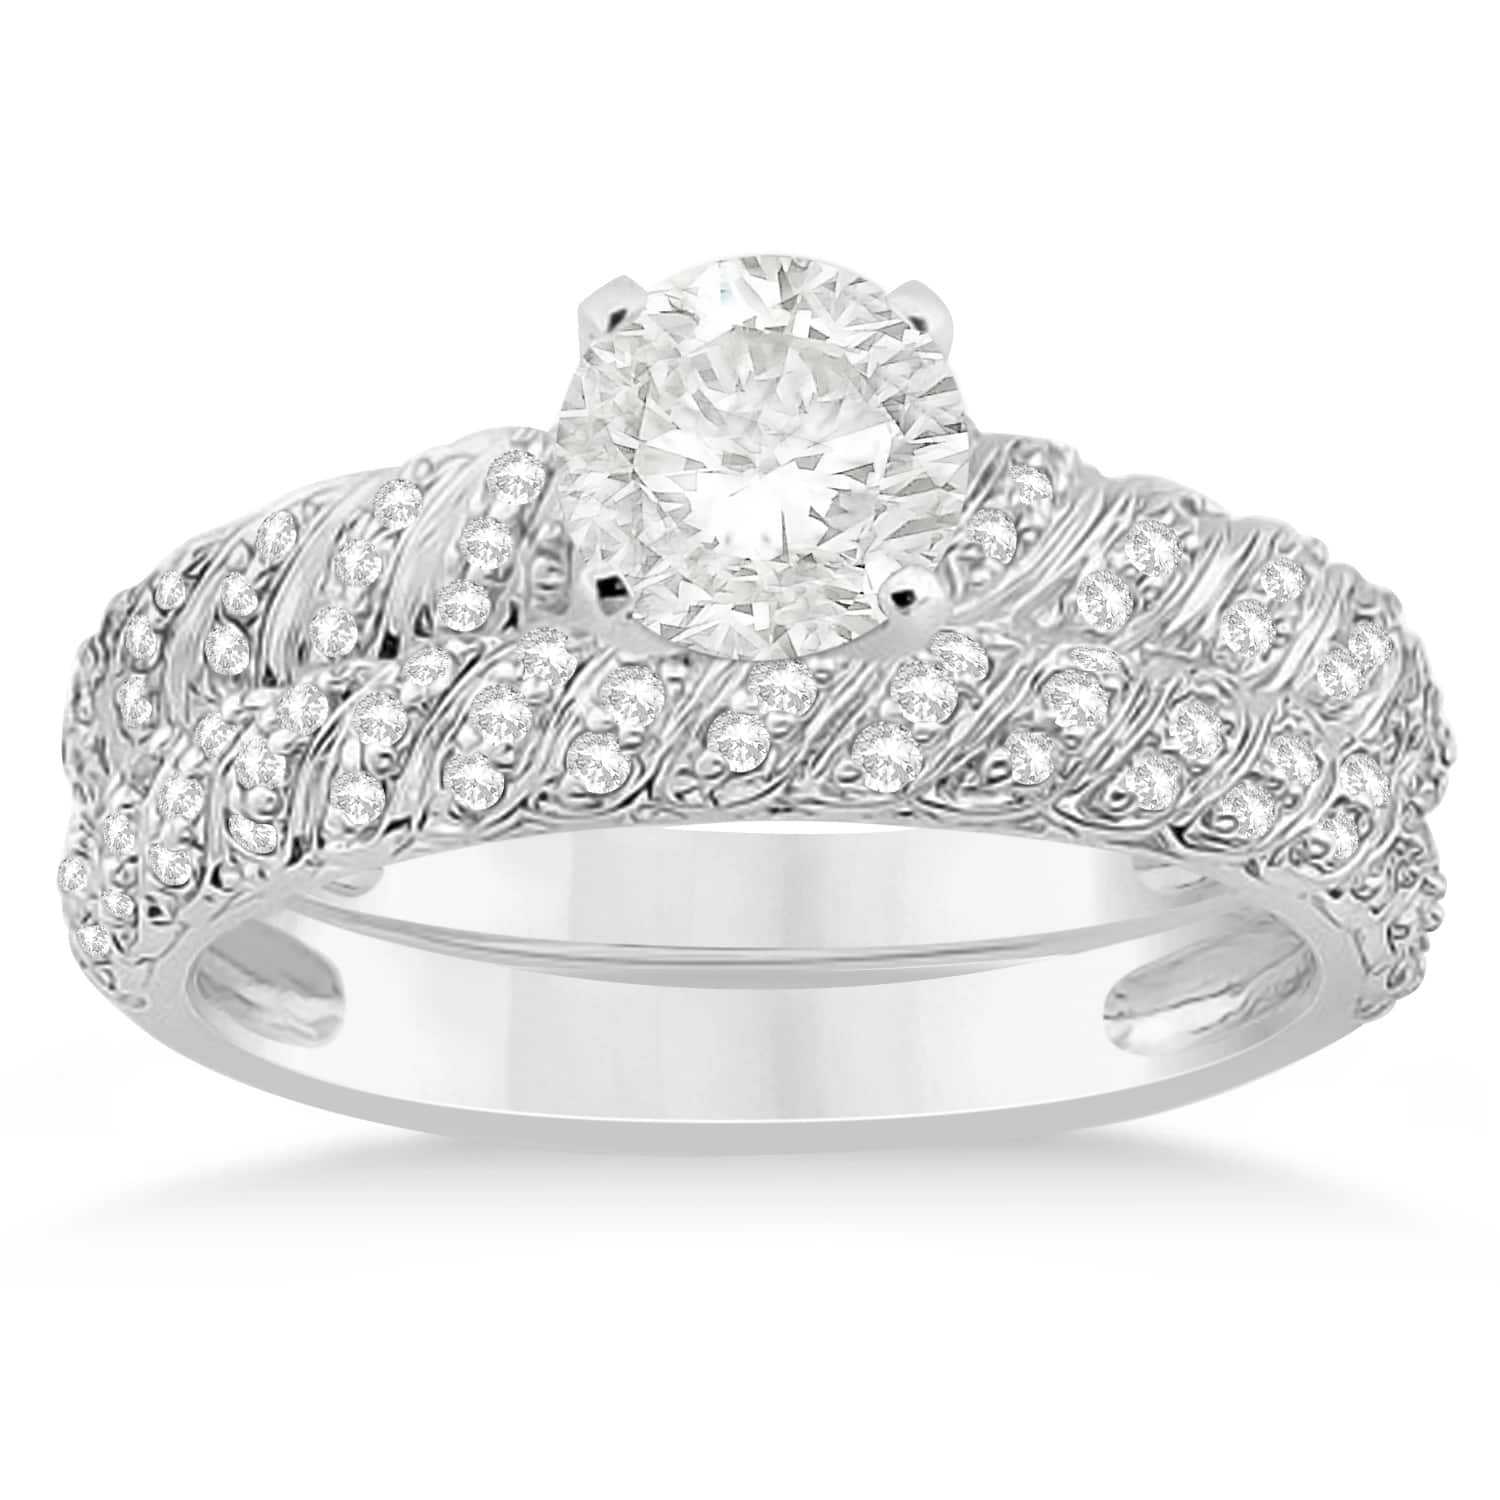 Diamond Swirl Bridal Set Setting 18k White Gold 0.41ct